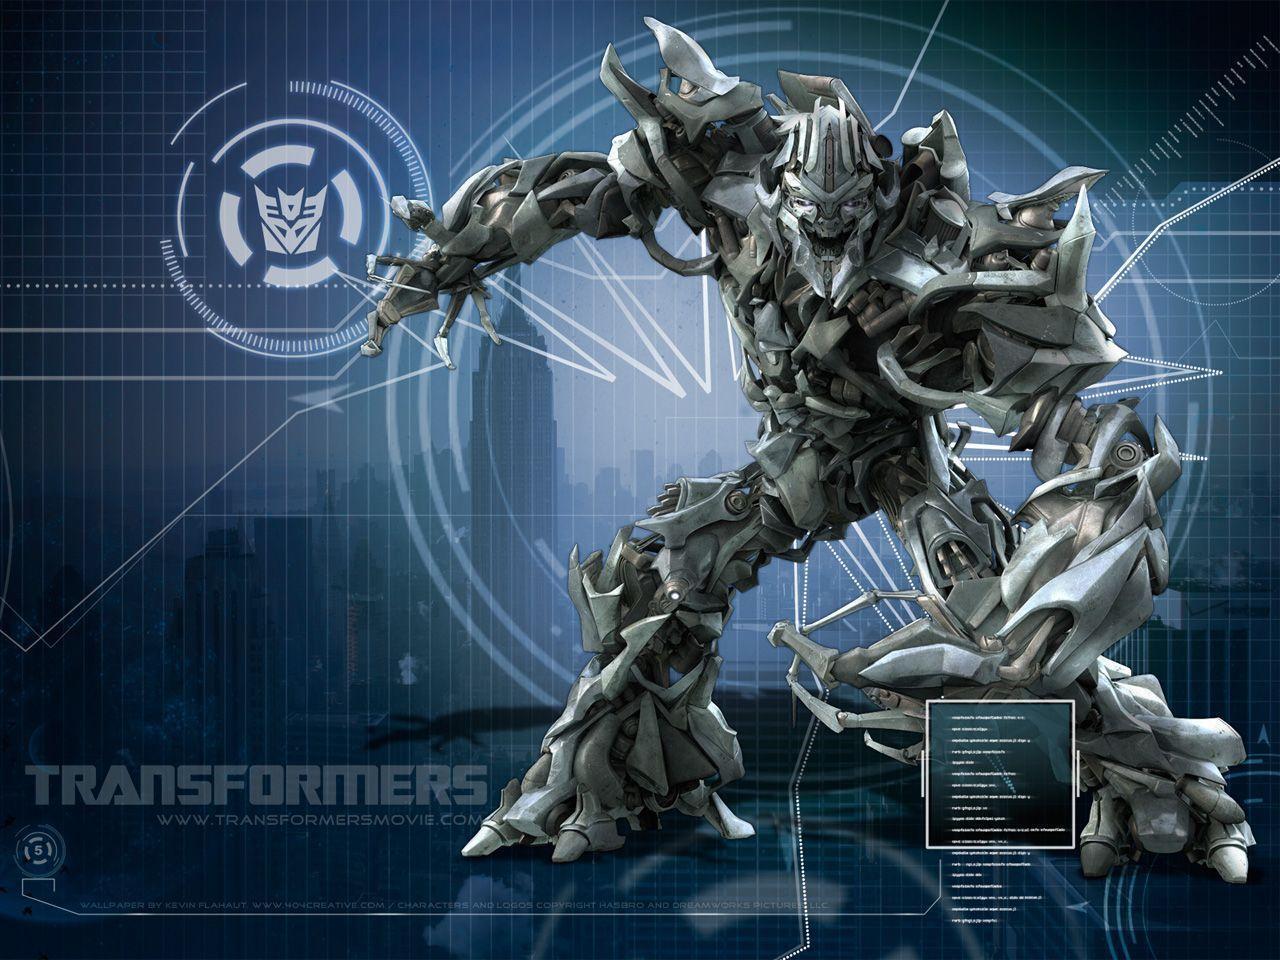 Autobots Transformers Wallpaper